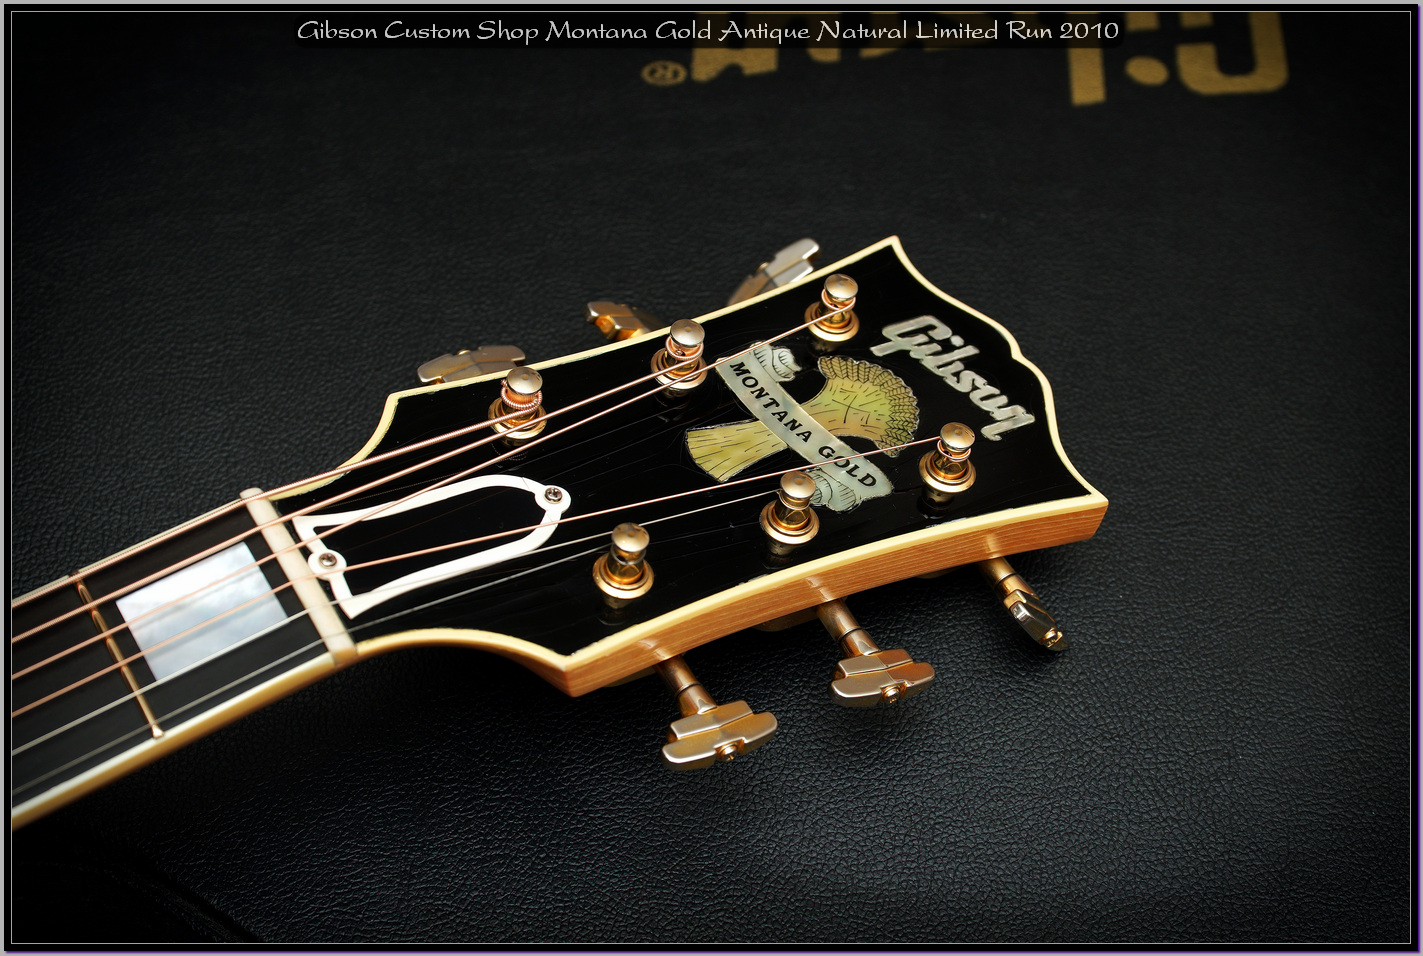 Gibson Custom Shop Montana Gold Antique Natural Limited Run 2010 02_x1400.jpg